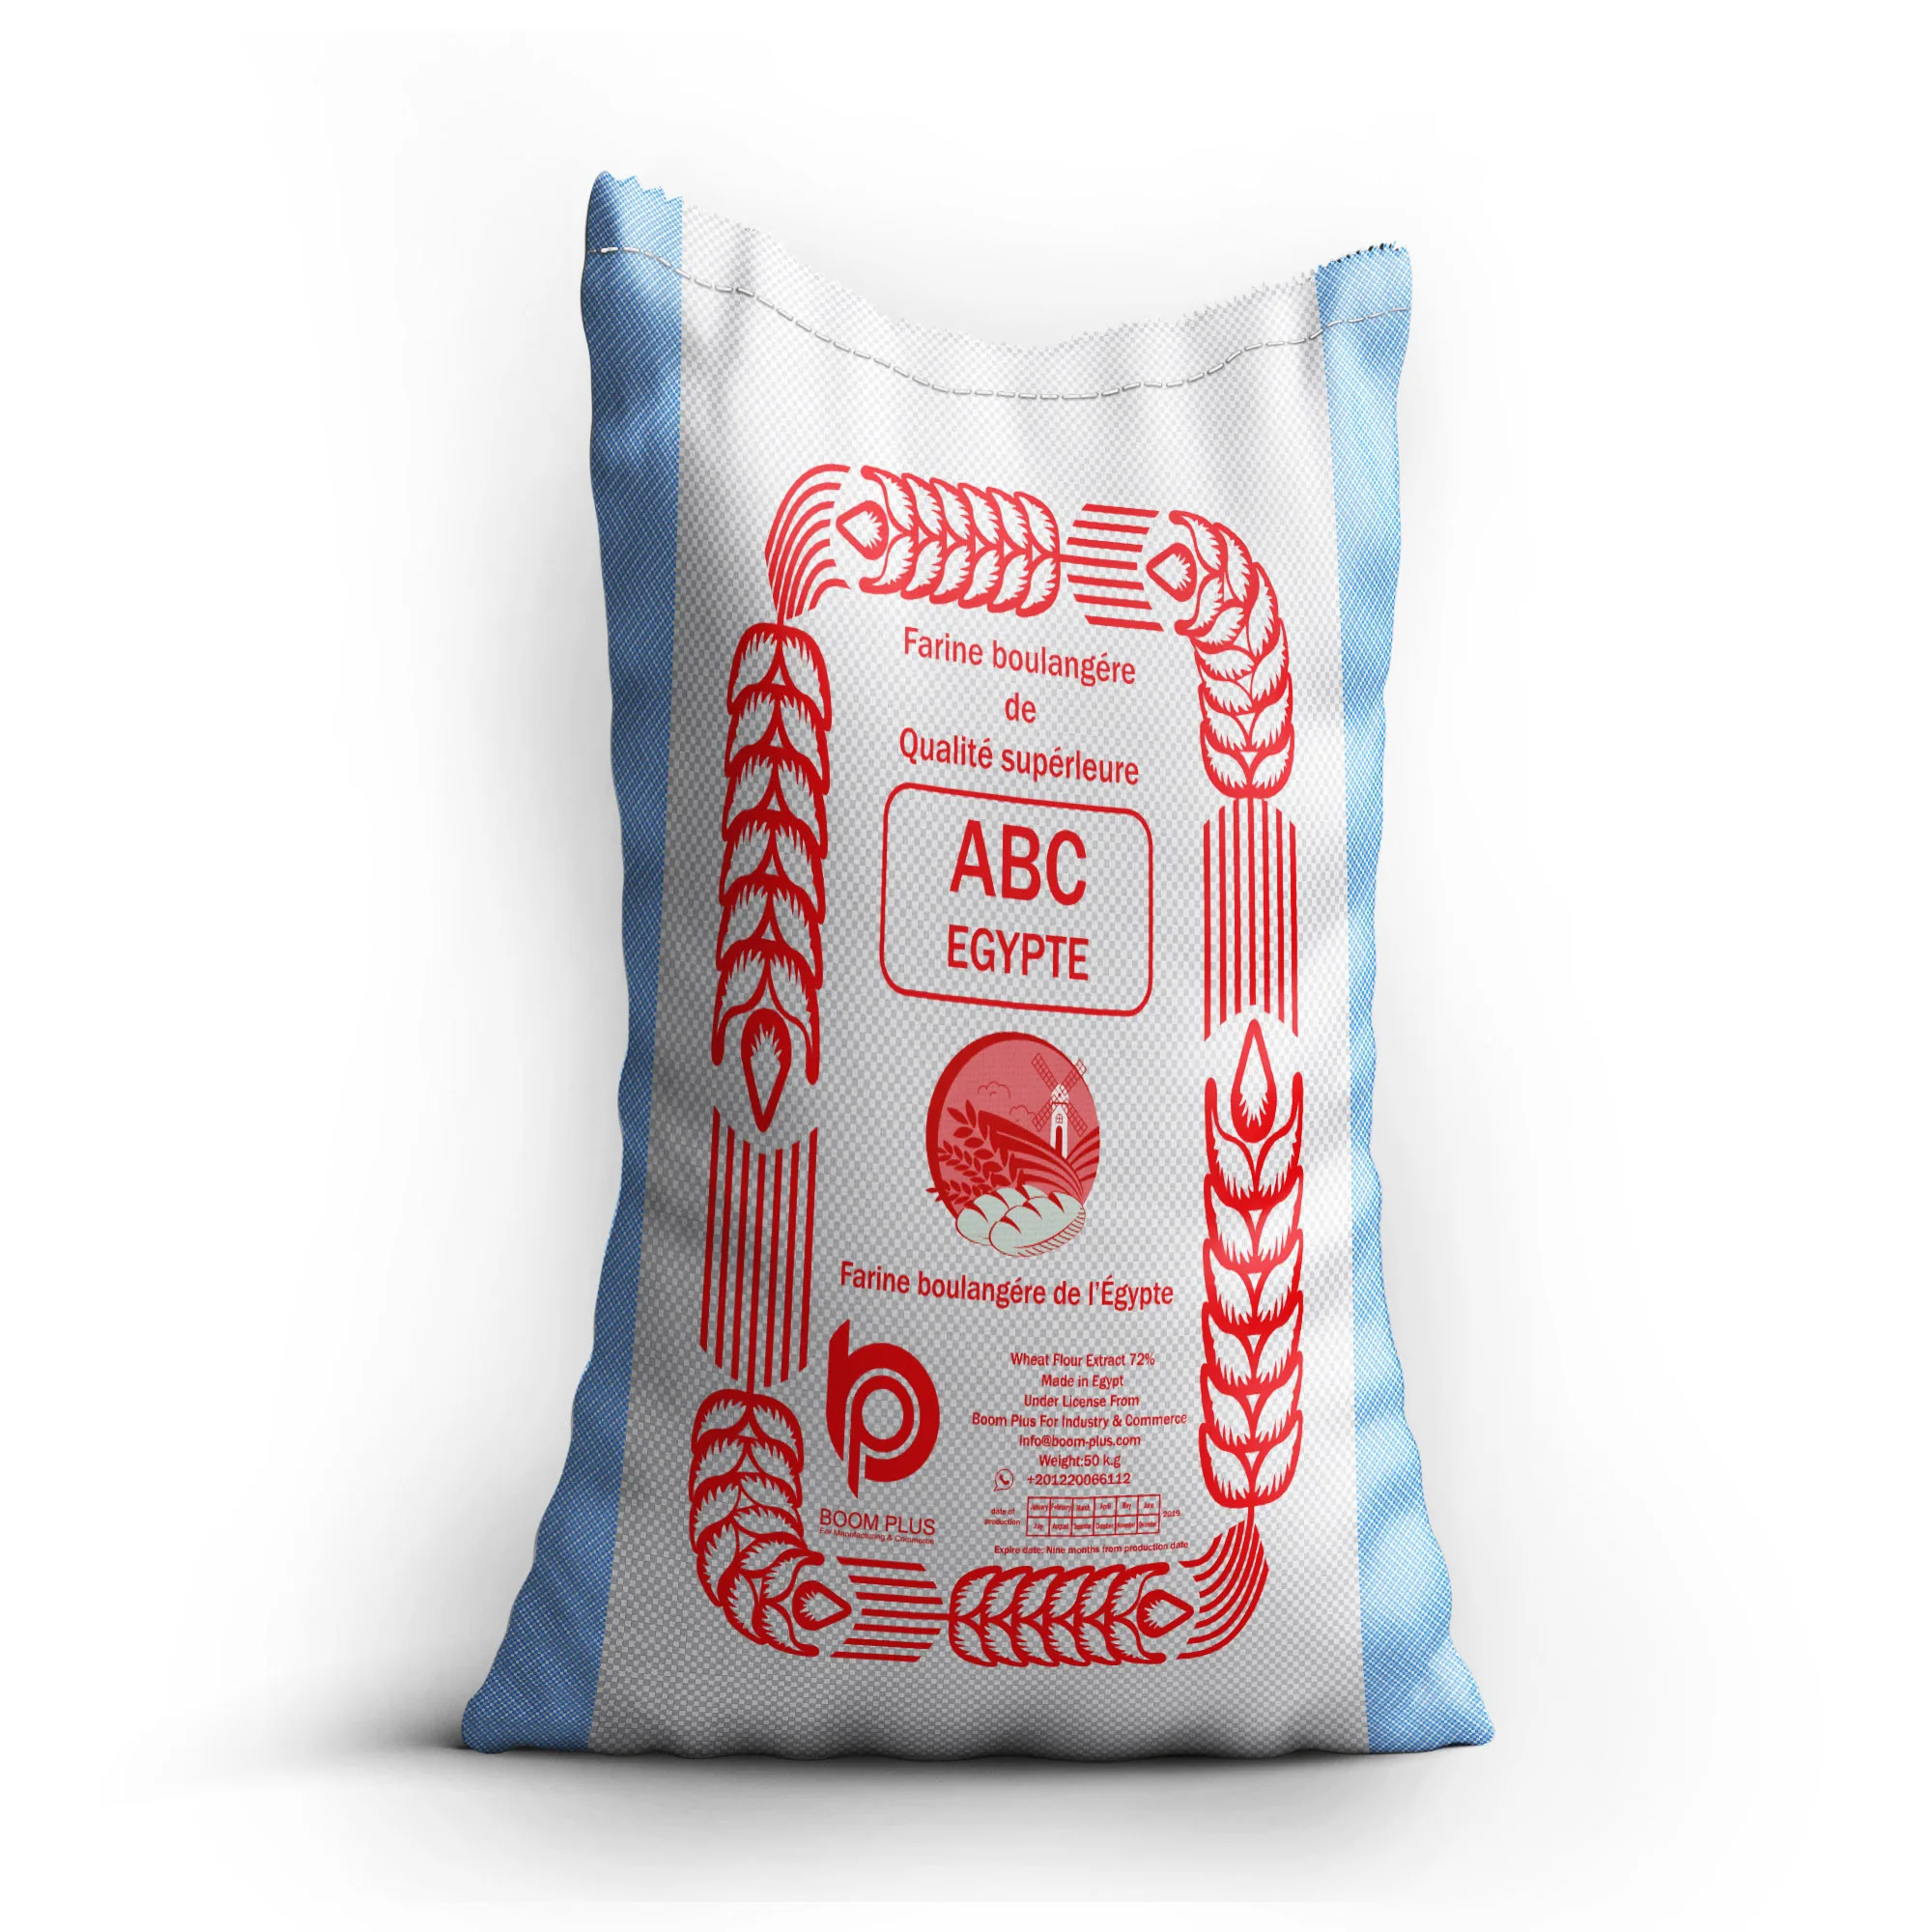 
All Purpose Wheat Flour 50 kg t55 ABC Egypt Egyptian Product Gluten Free  (50031841598)